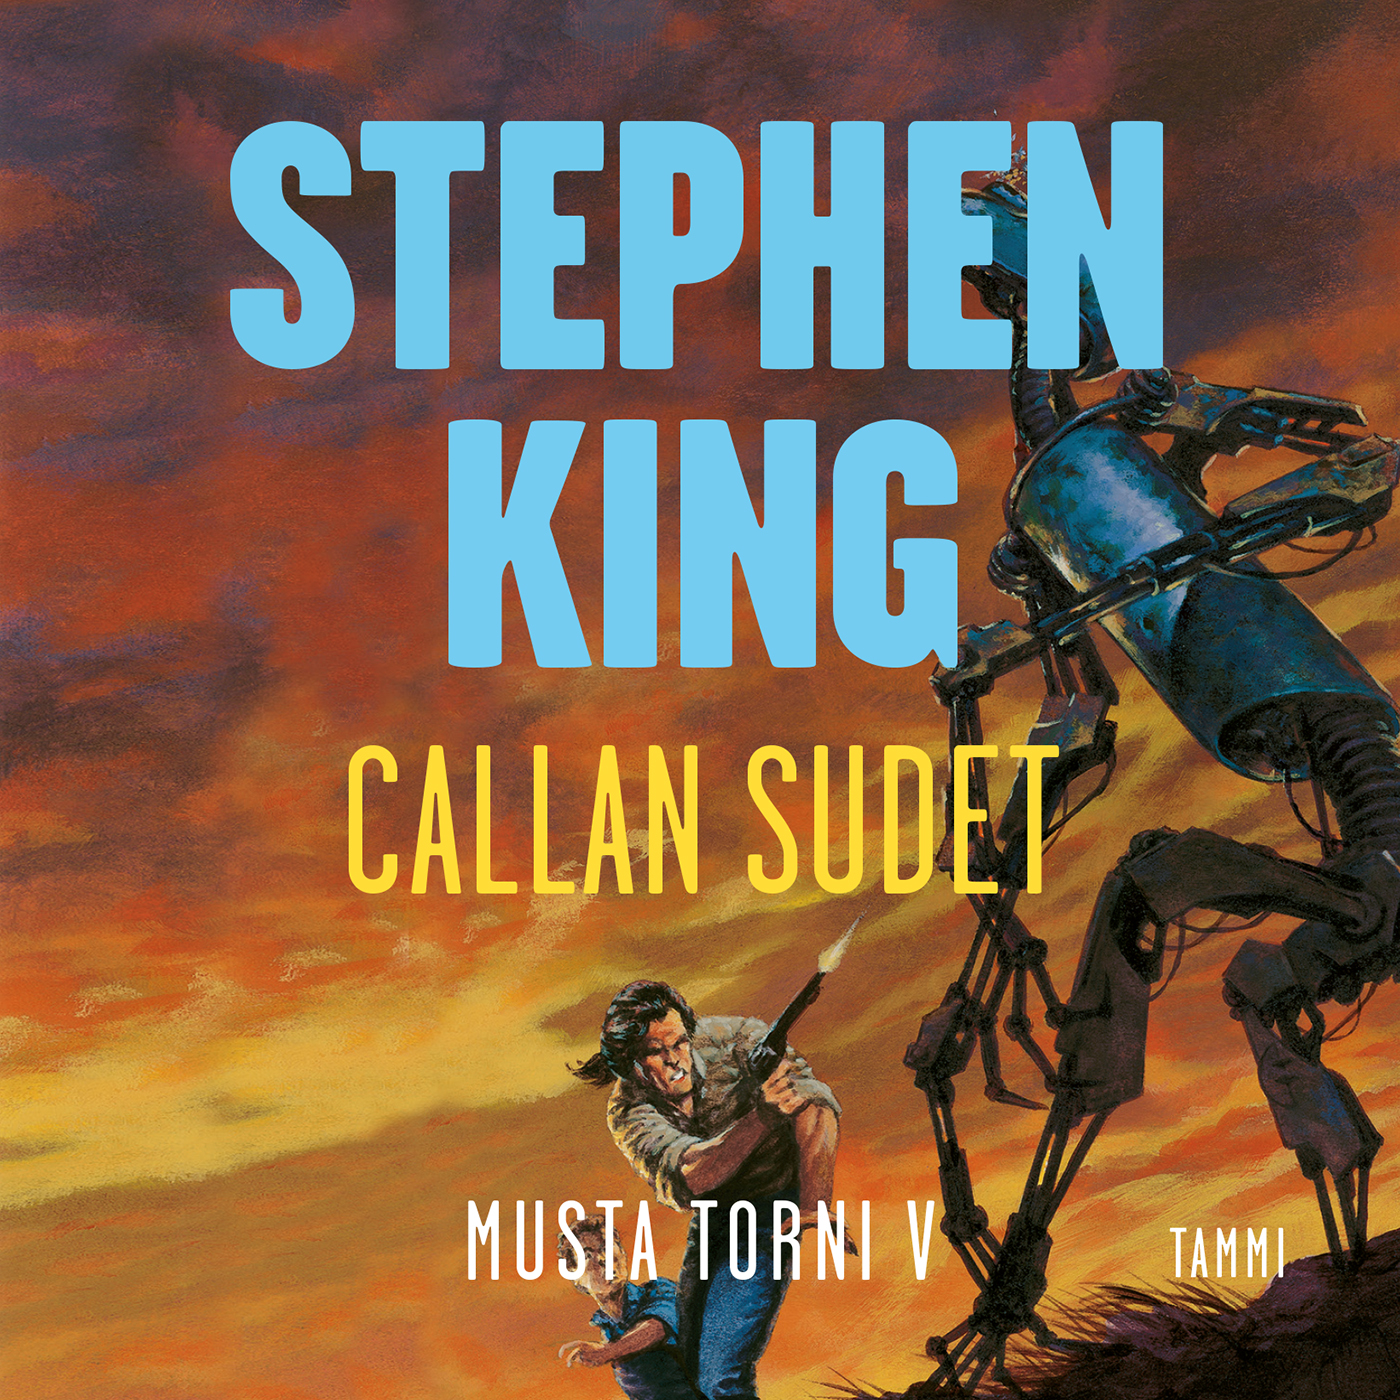 King, Stephen - Callan sudet: Musta torni V, äänikirja